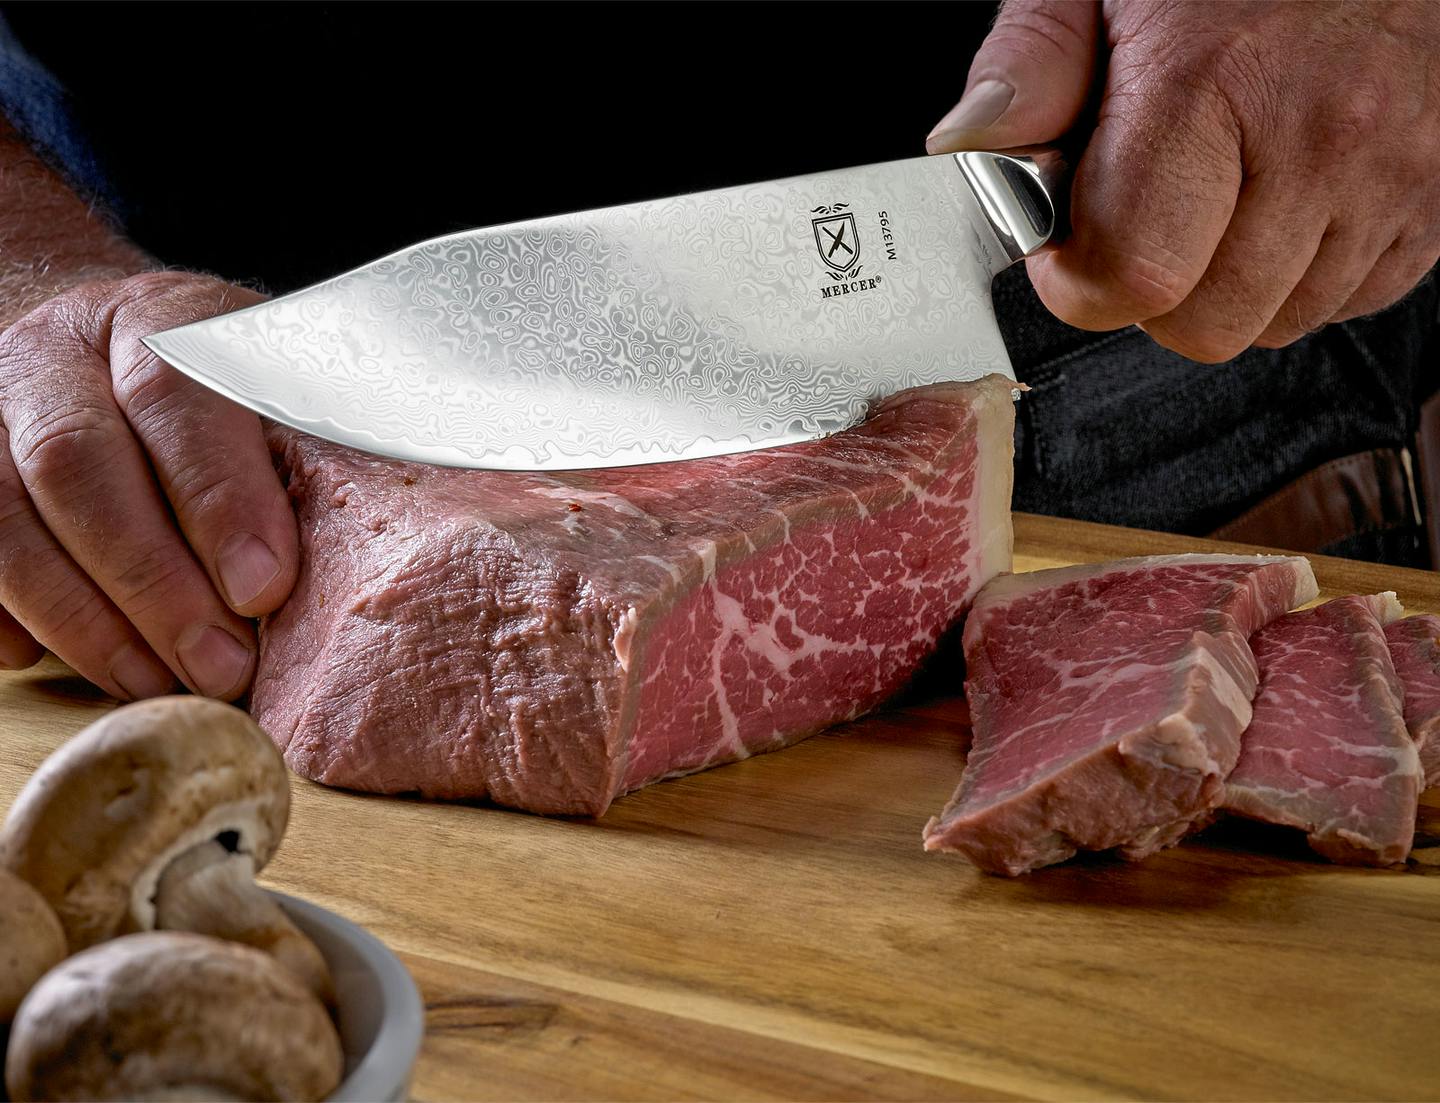 Mercer Culinary M13795 8 Damascus Hunter Chef's Knife